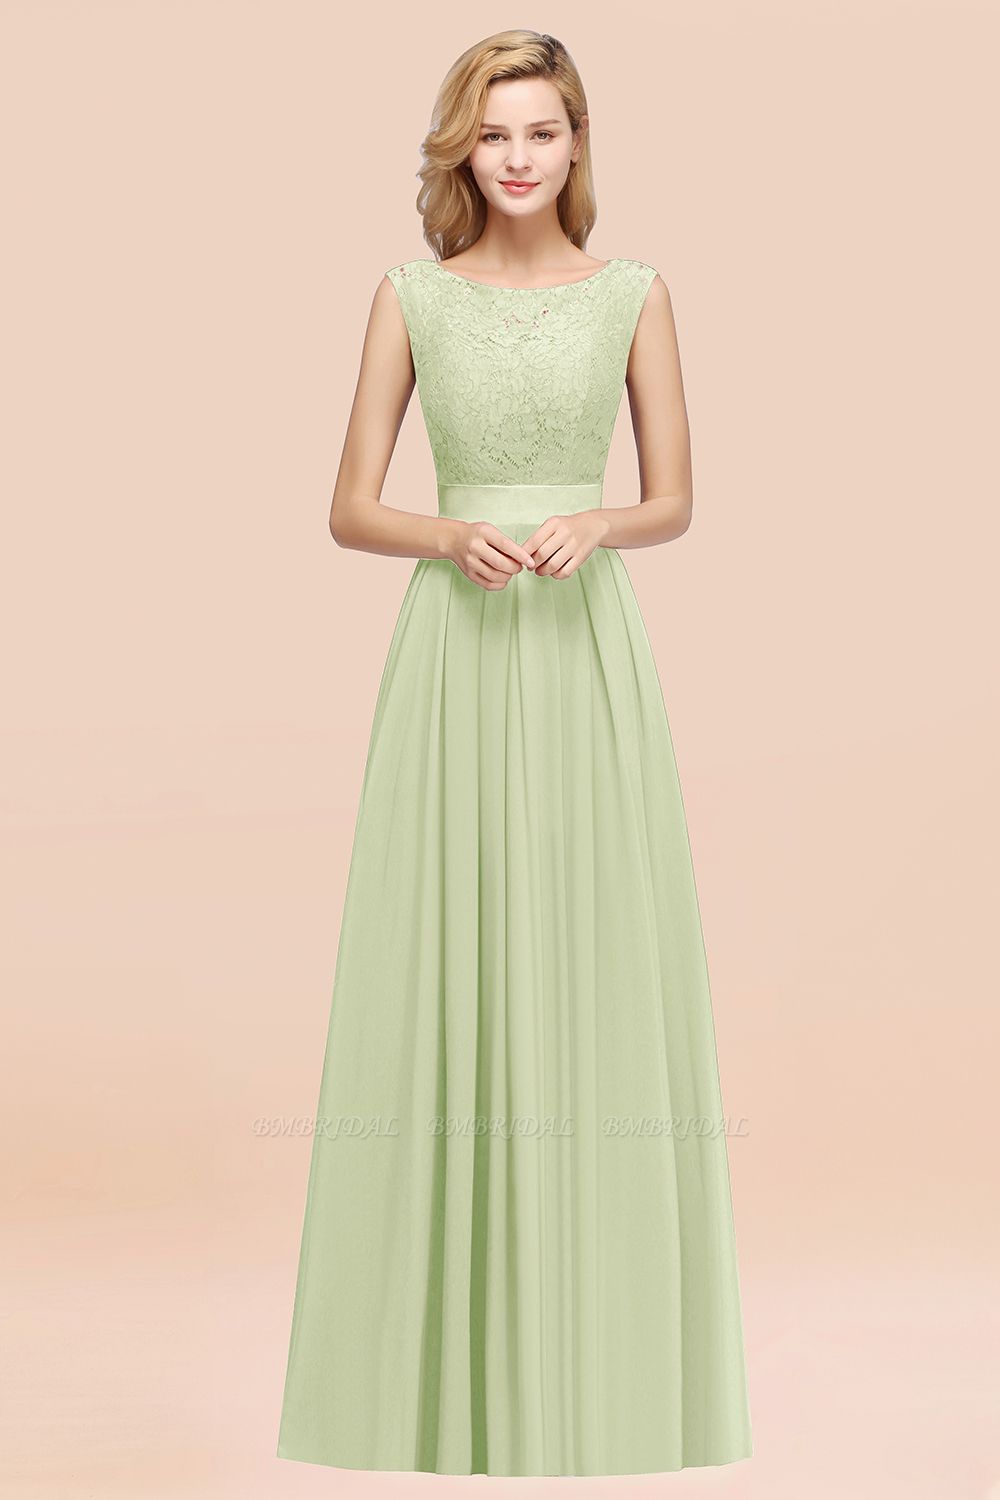 BMbridal Vintage Sleeveless Lace Bridesmaid Dresses Affordable Chiffon Wedding Party Dress Online